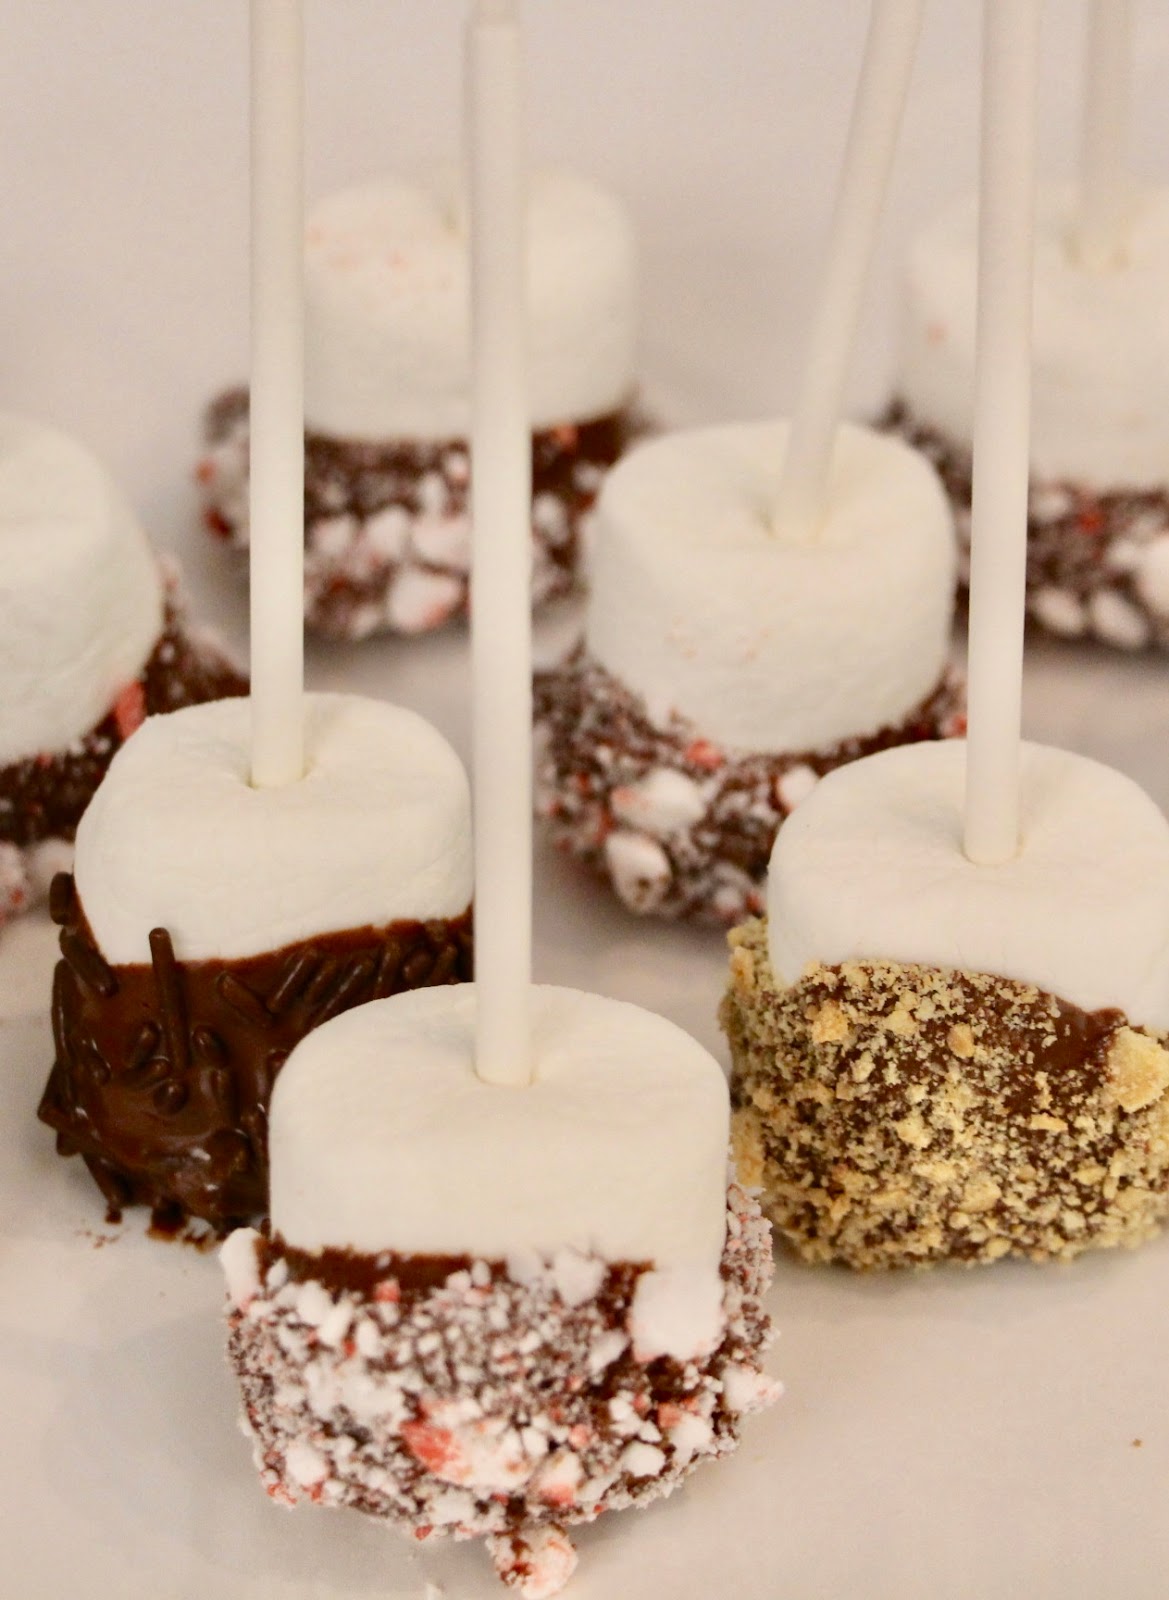 My Sweet Savannah: chocolate dipped marshmallows